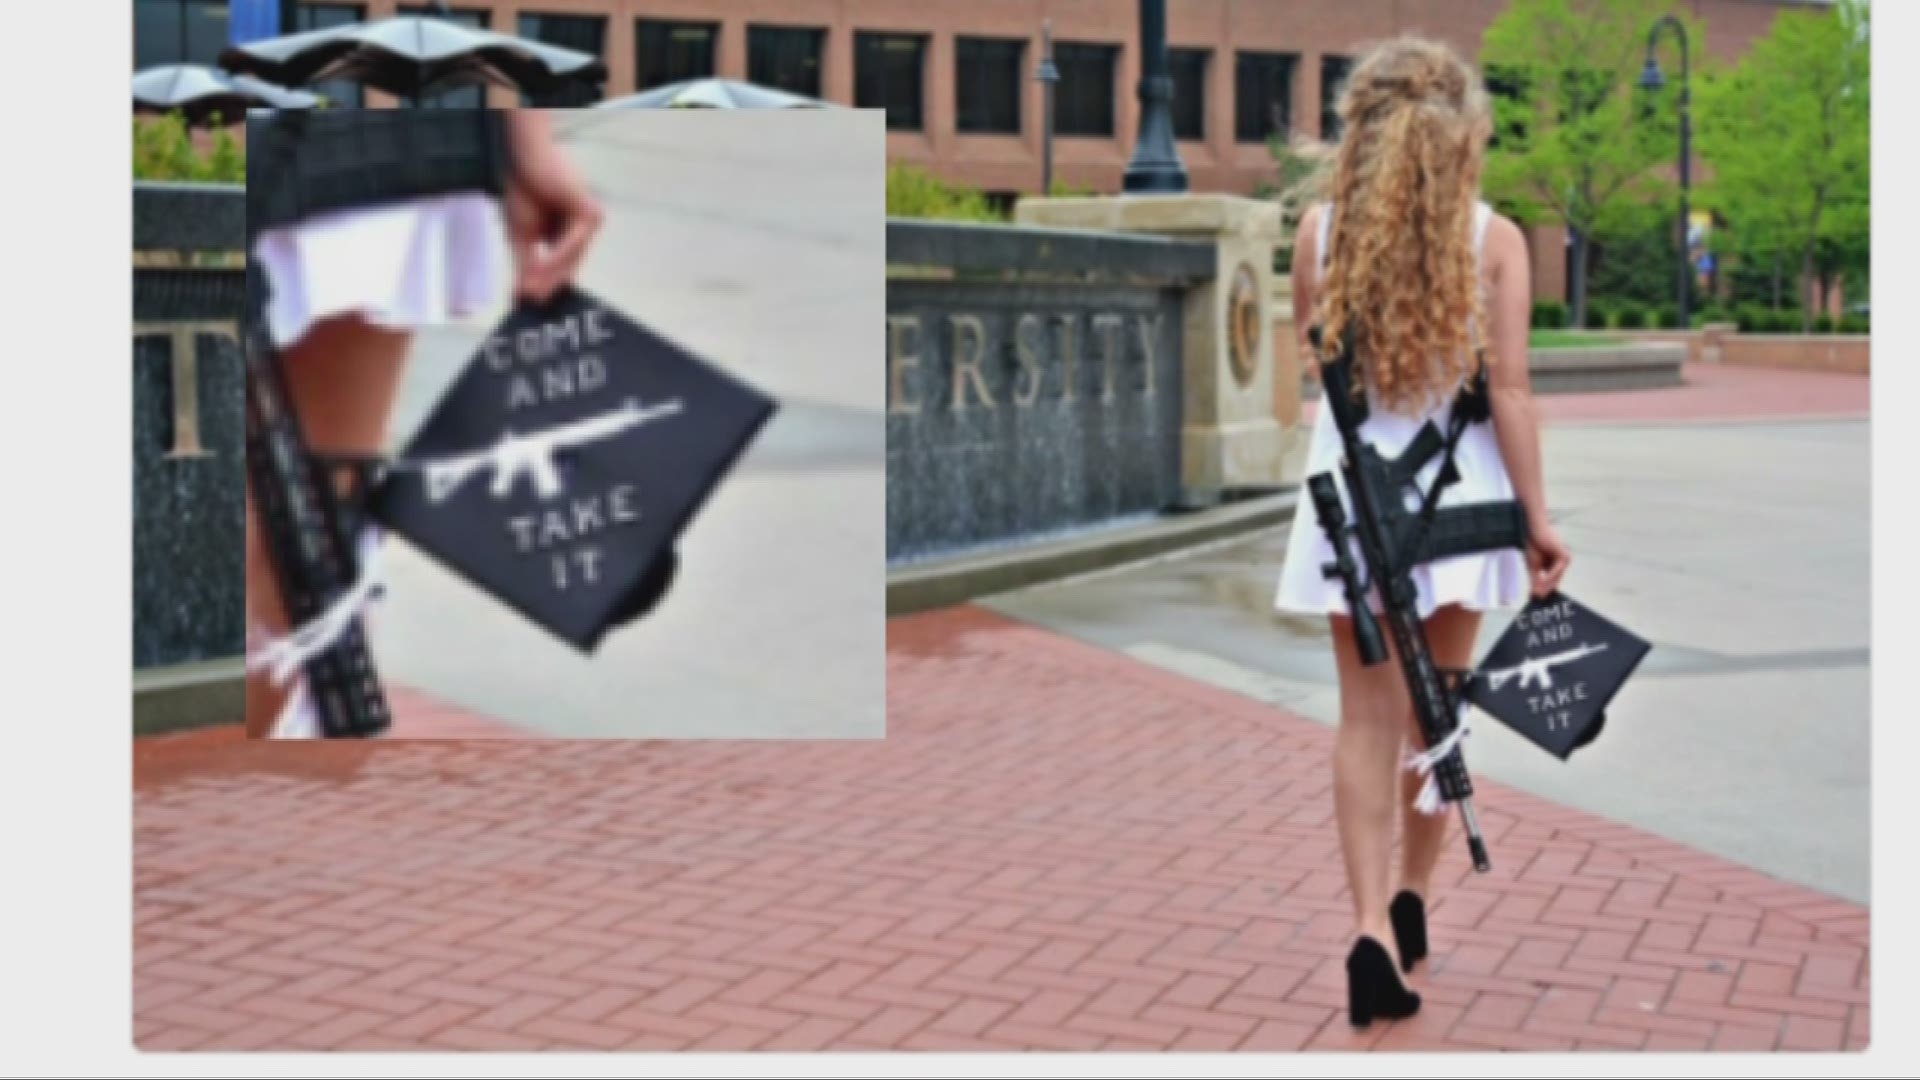 Kent State graduate makes social media statement by carrying gun